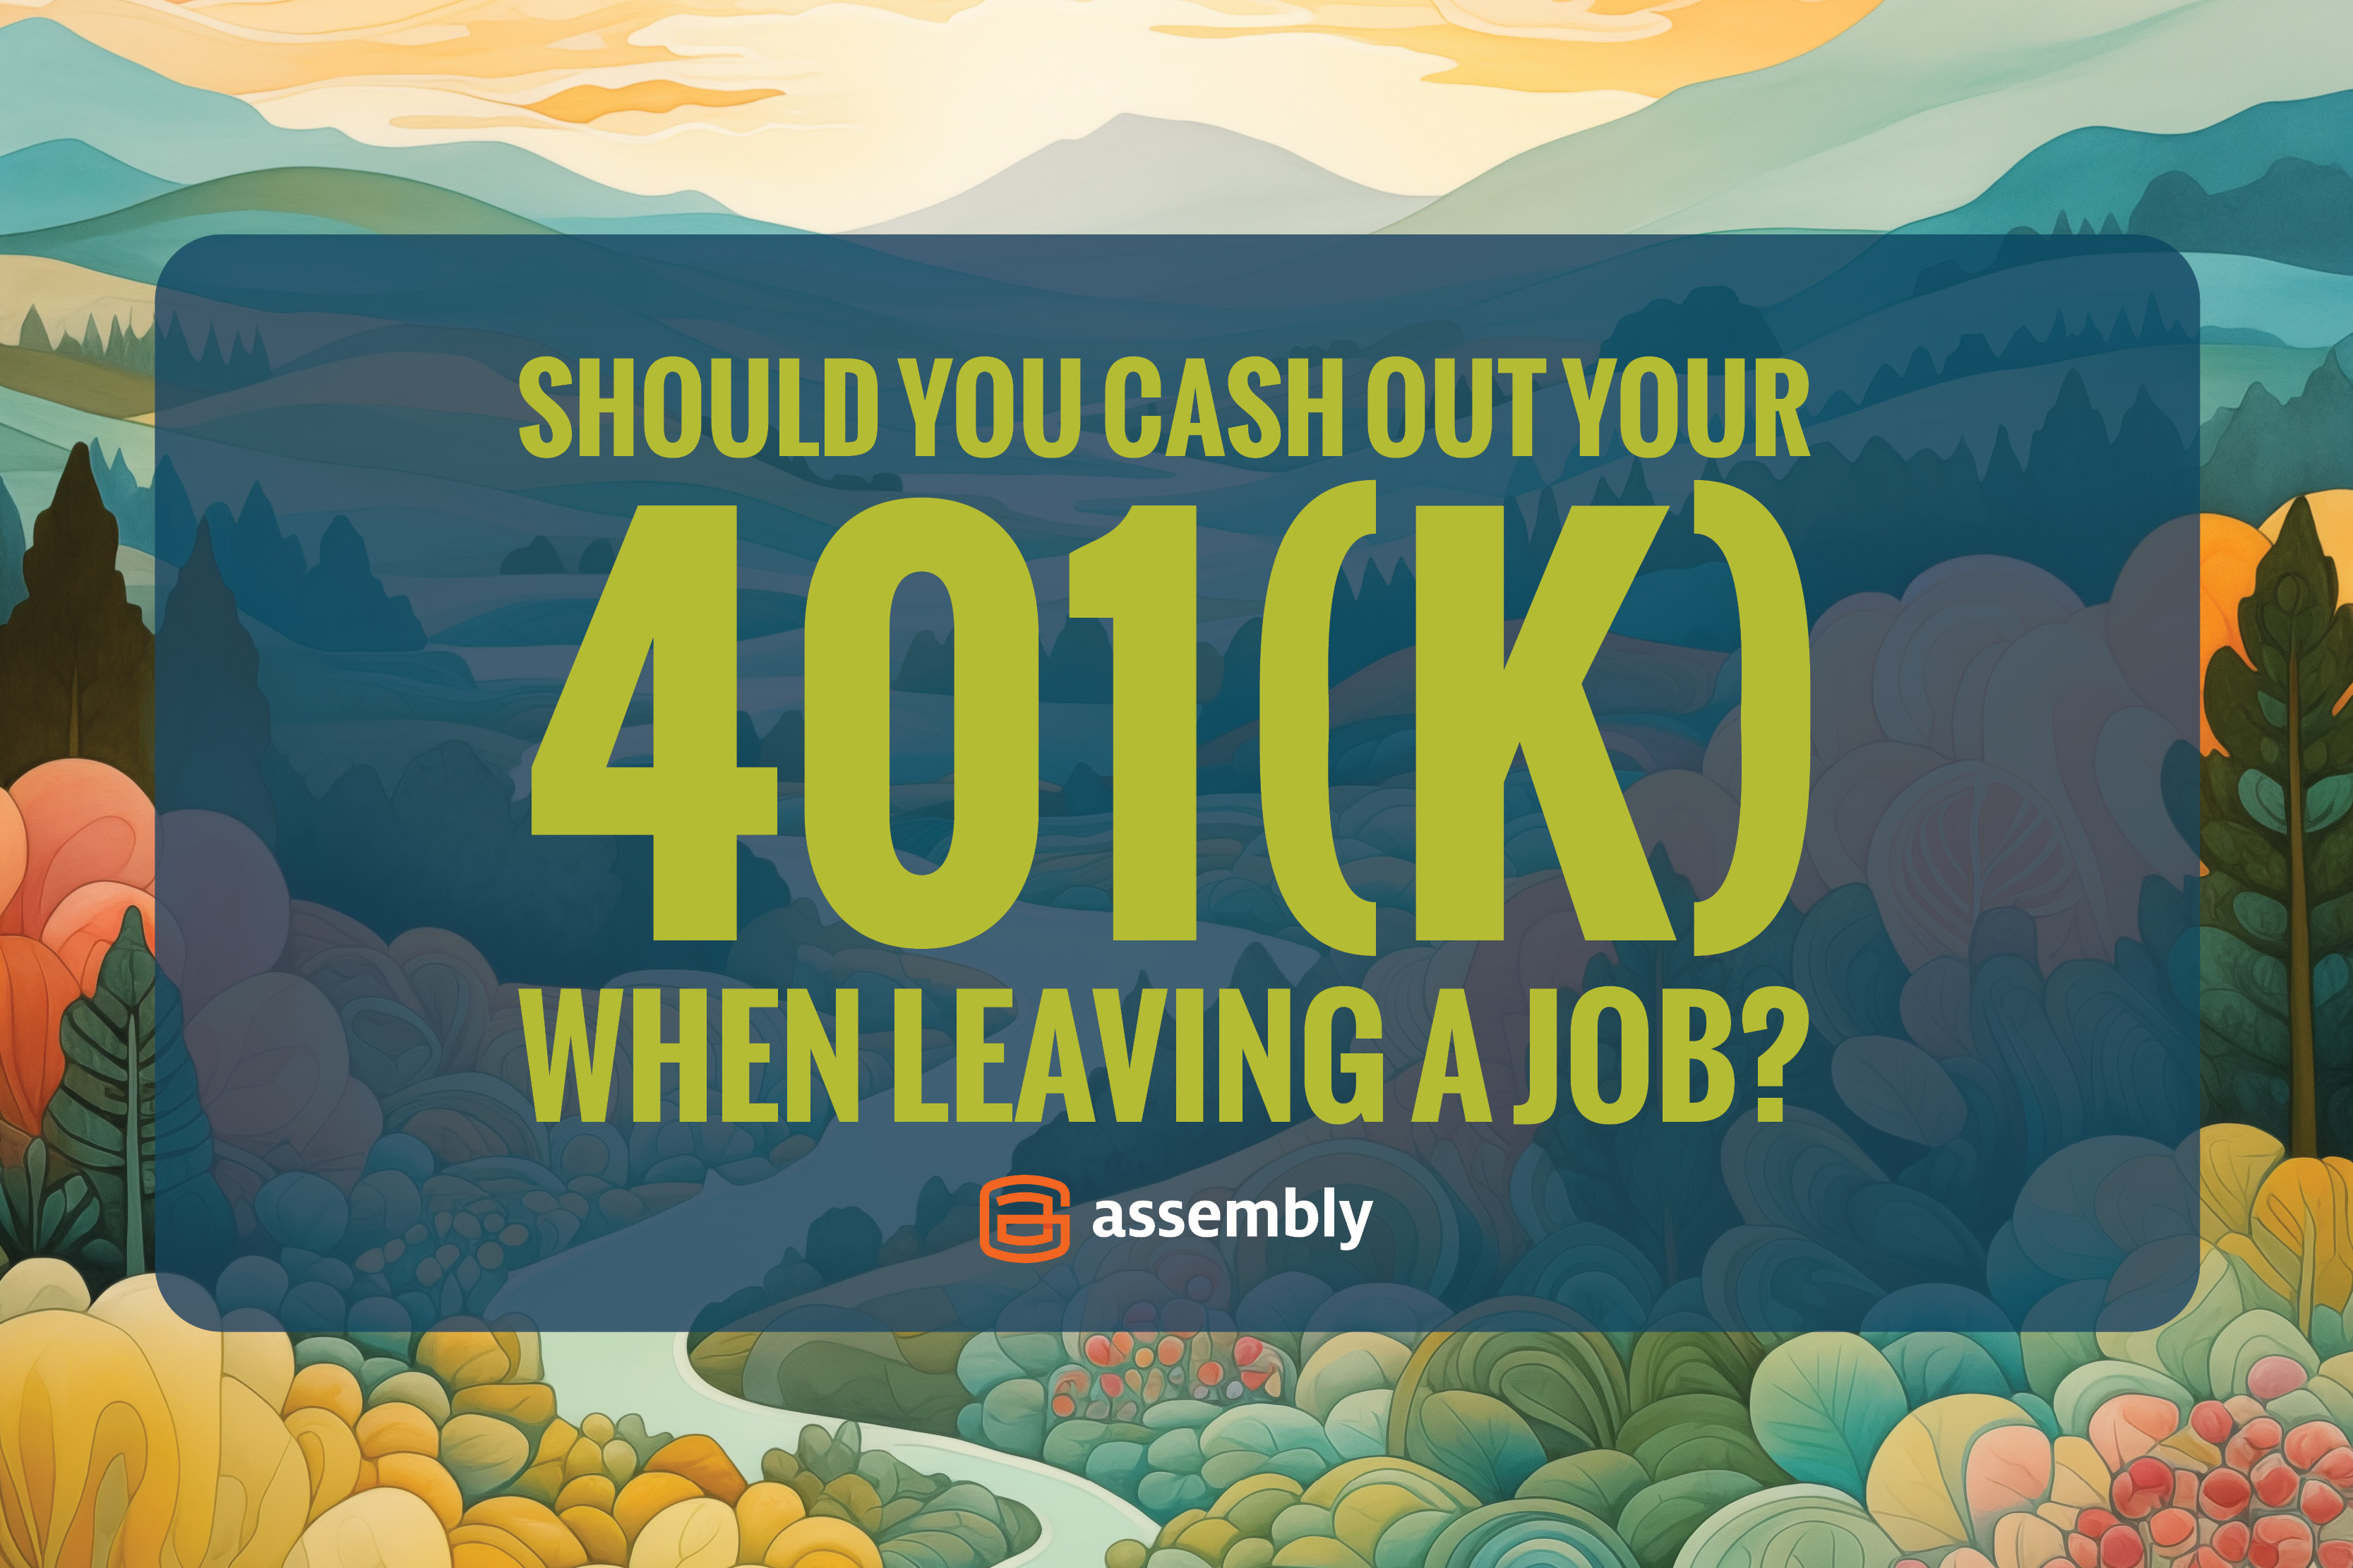 Should you cash out your 401k when leaving a job?